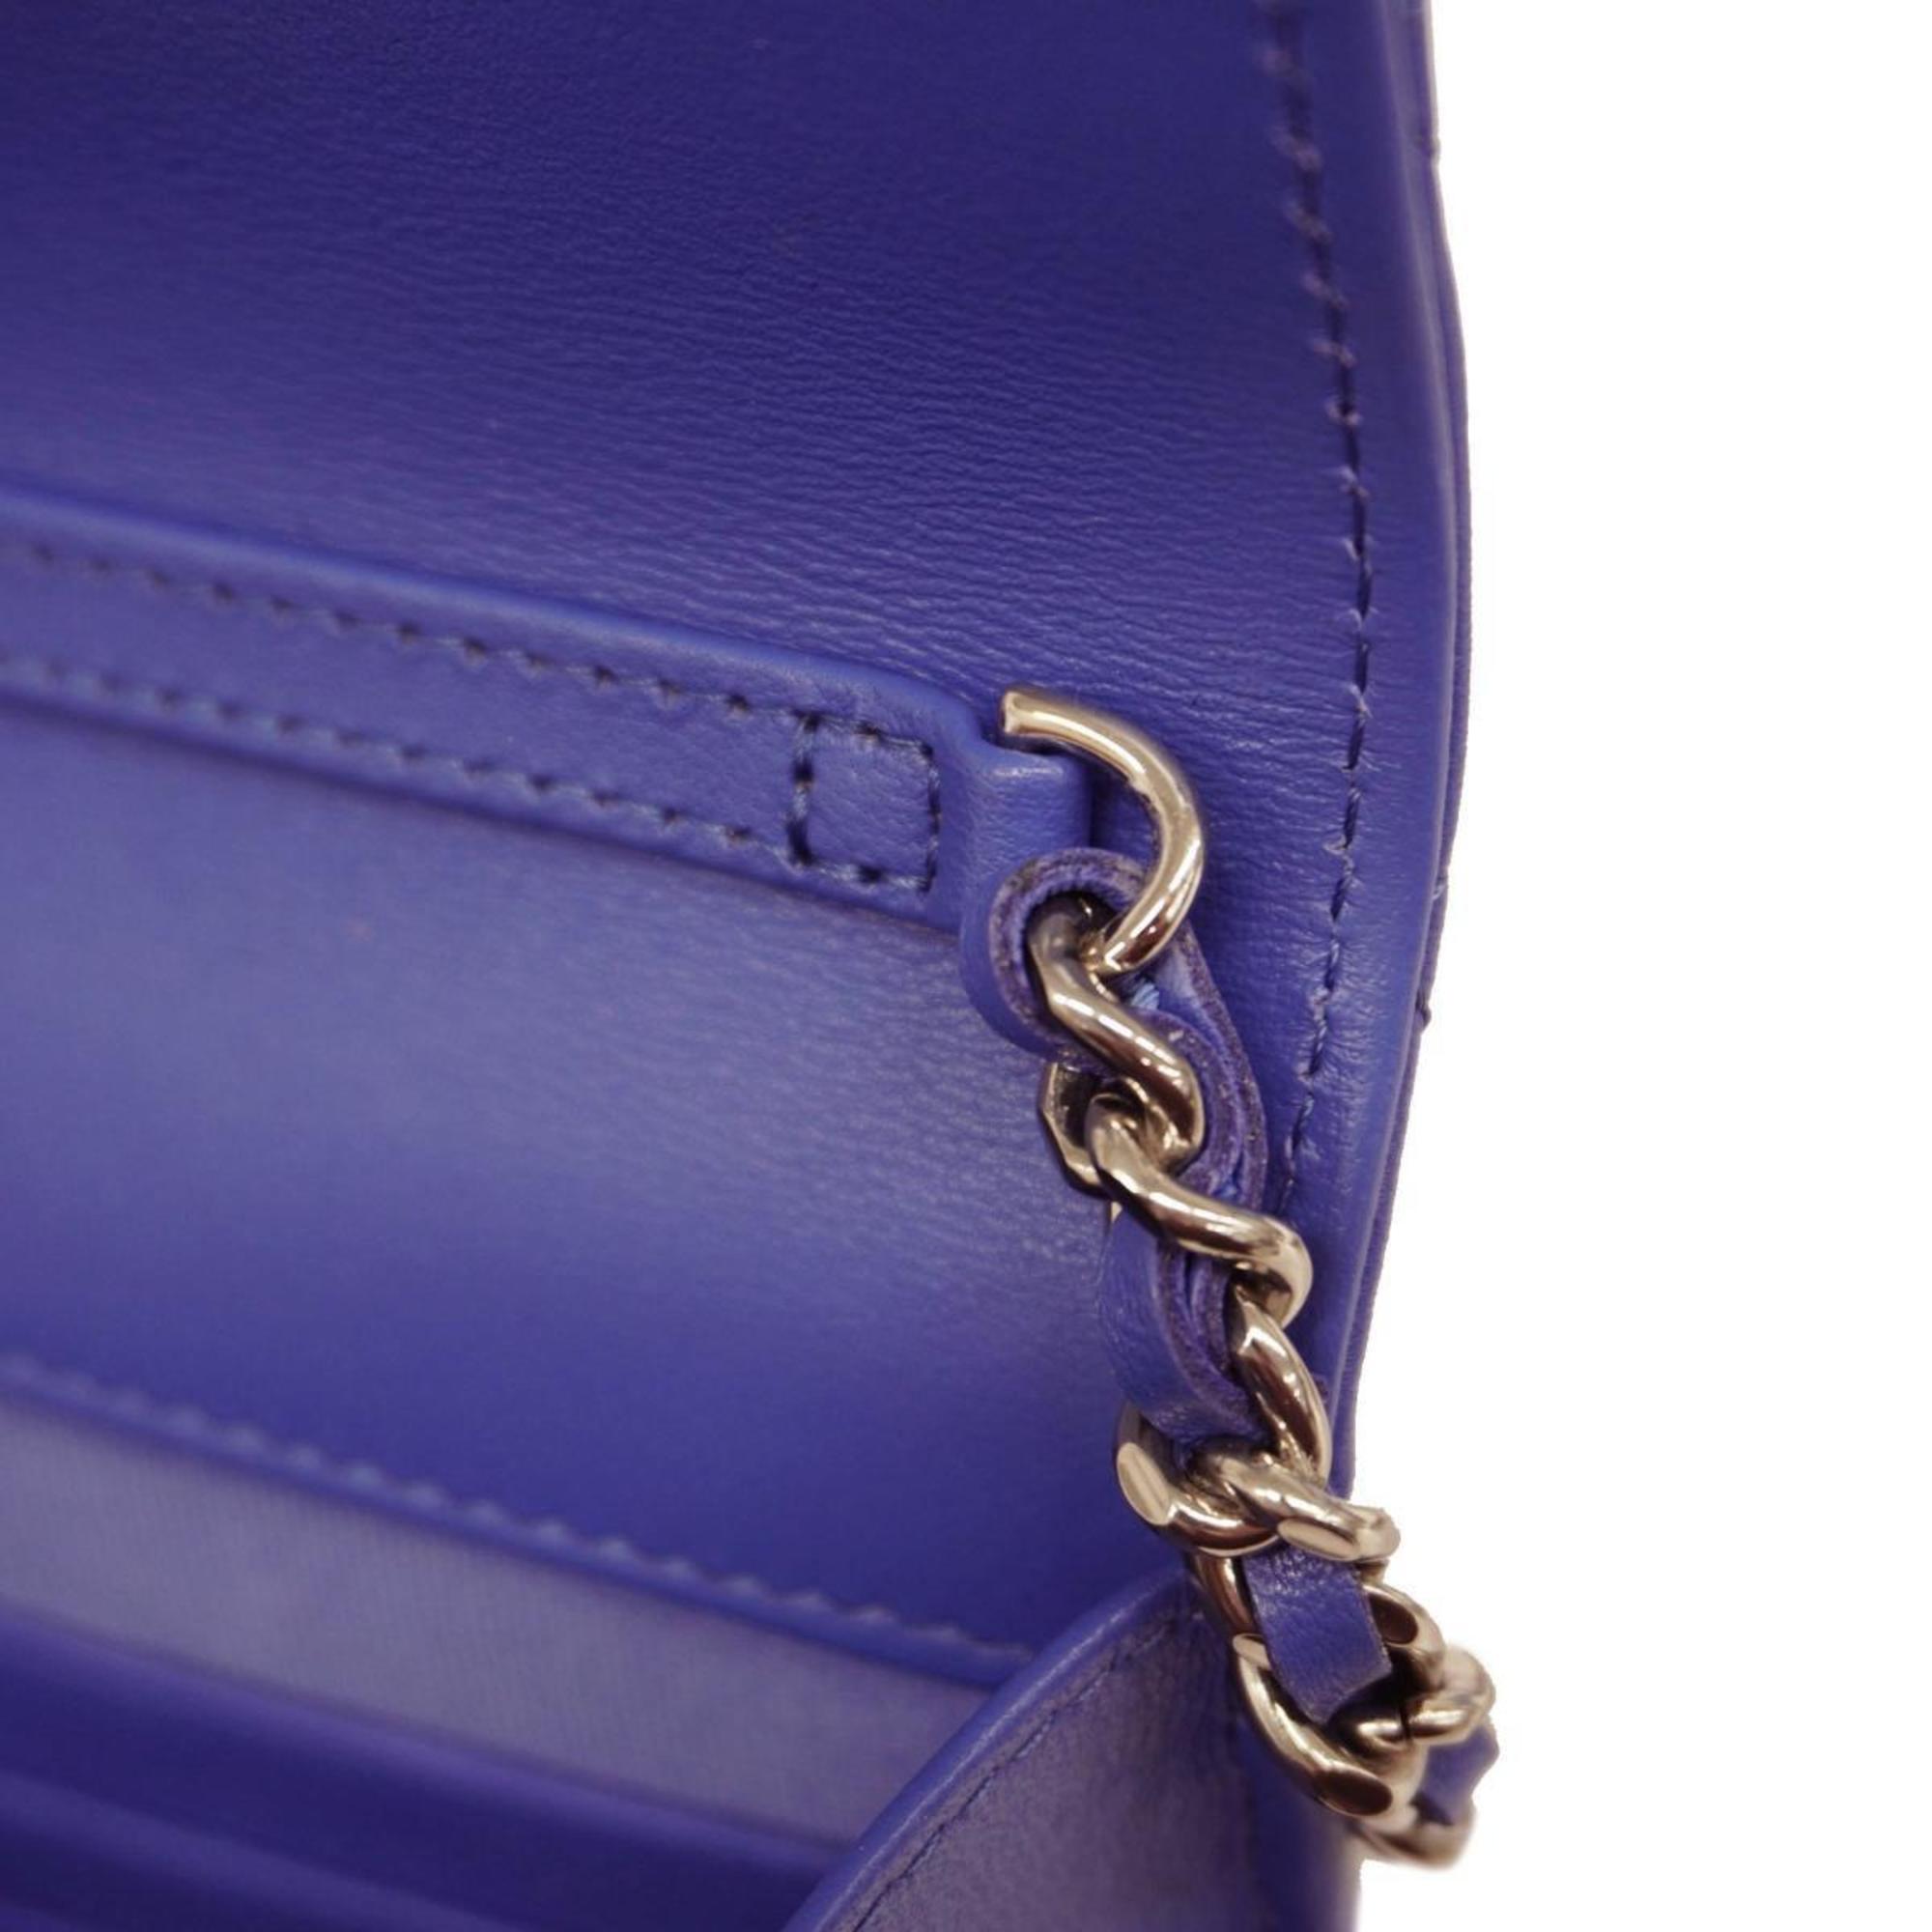 Chanel Shoulder Bag, Matelasse, Chain Shoulder, Lambskin, Blue, Women's